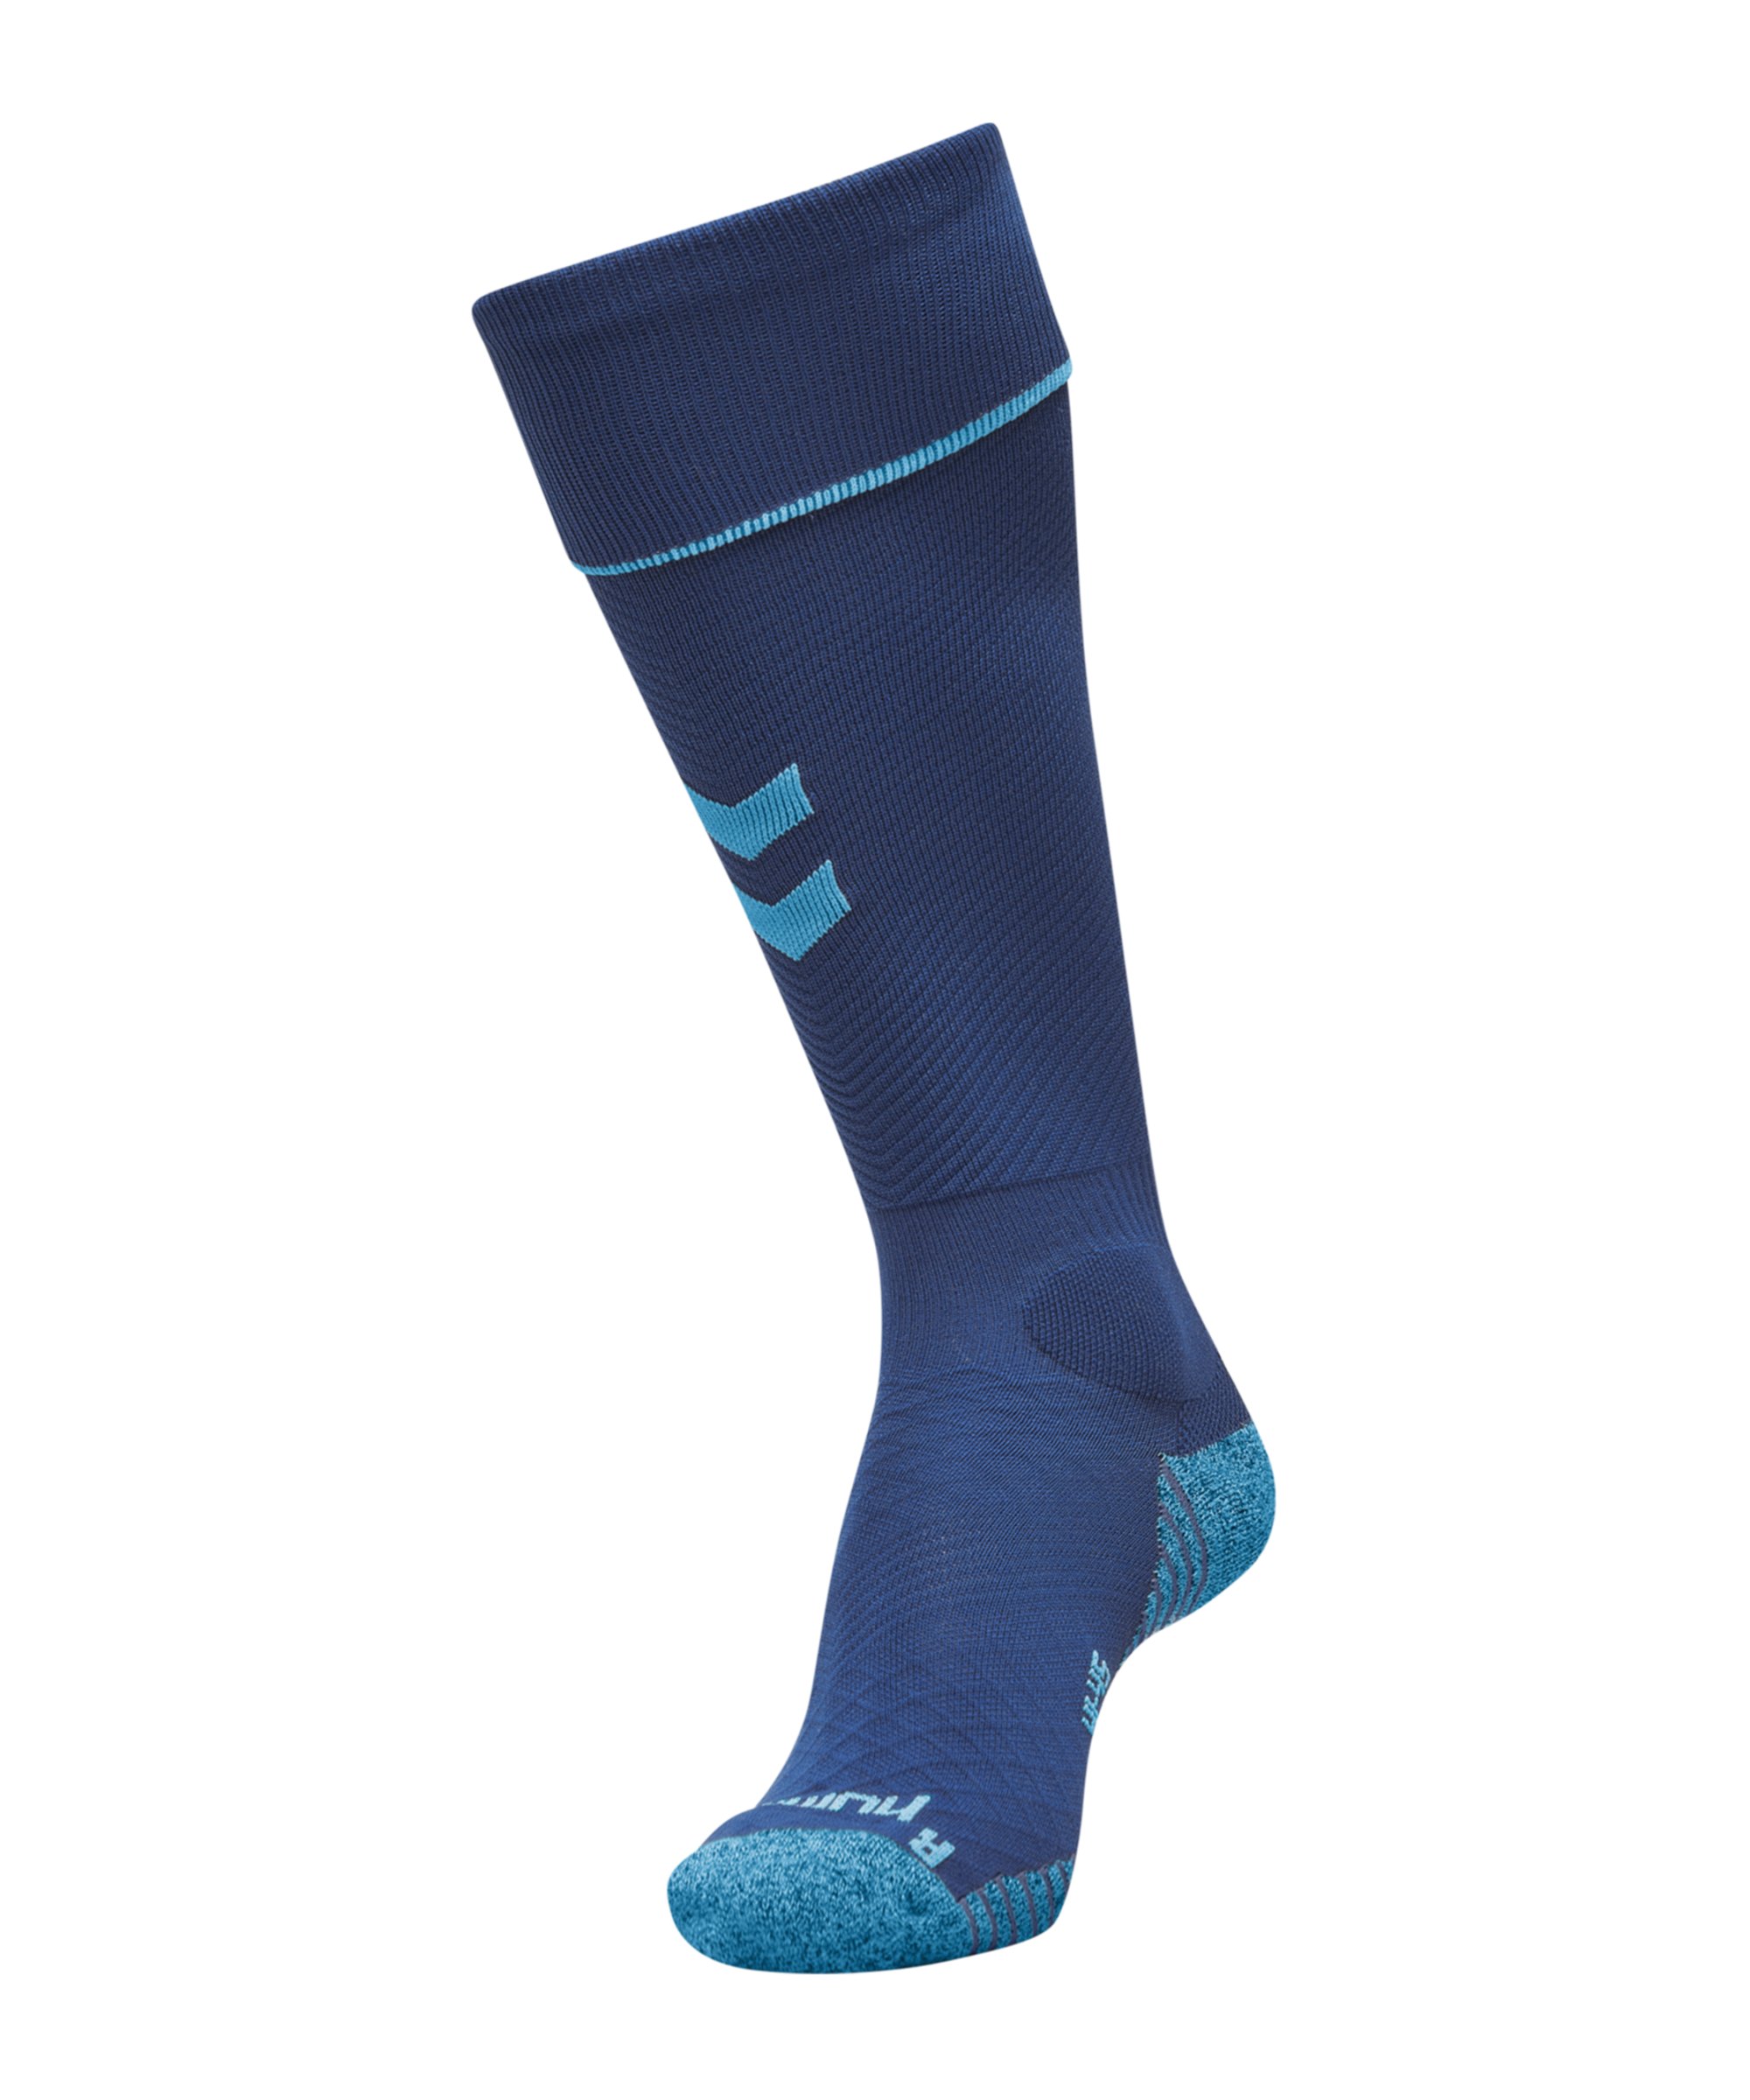 Hummel Pro Football Sock Socken Blau F8744 - Blau